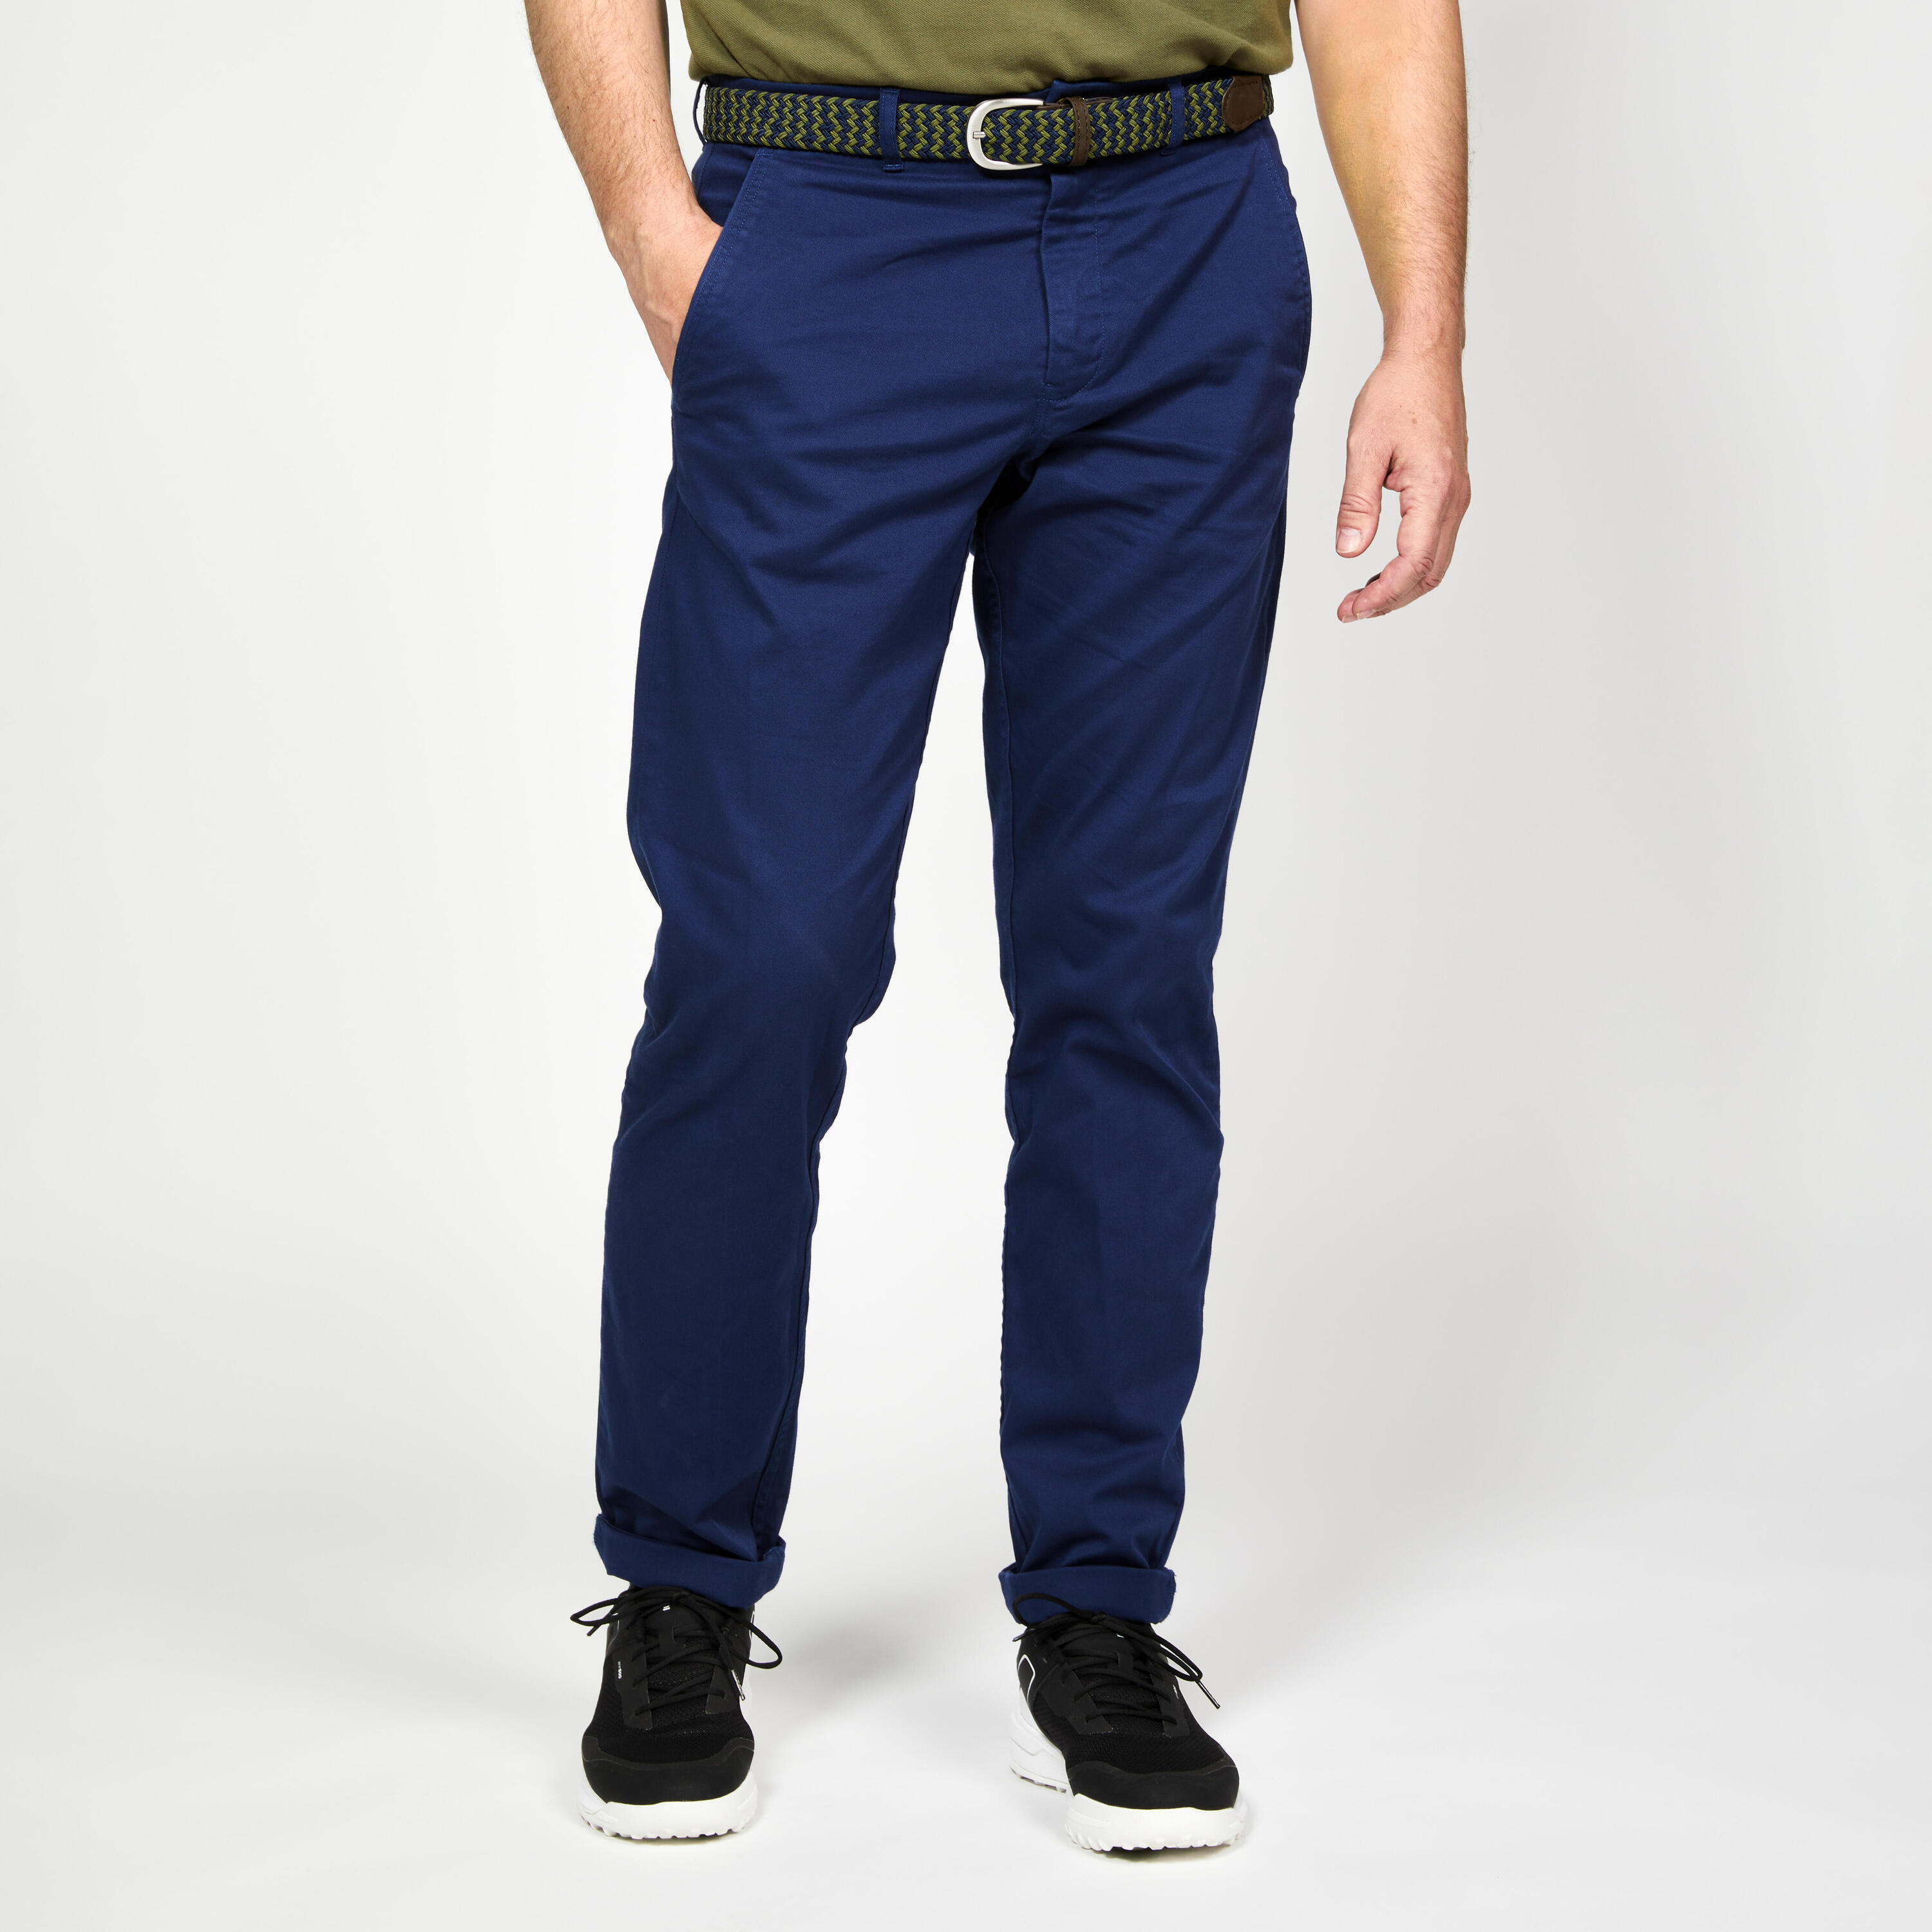 INESIS Men's golf cotton chino trousers - MW500 blue